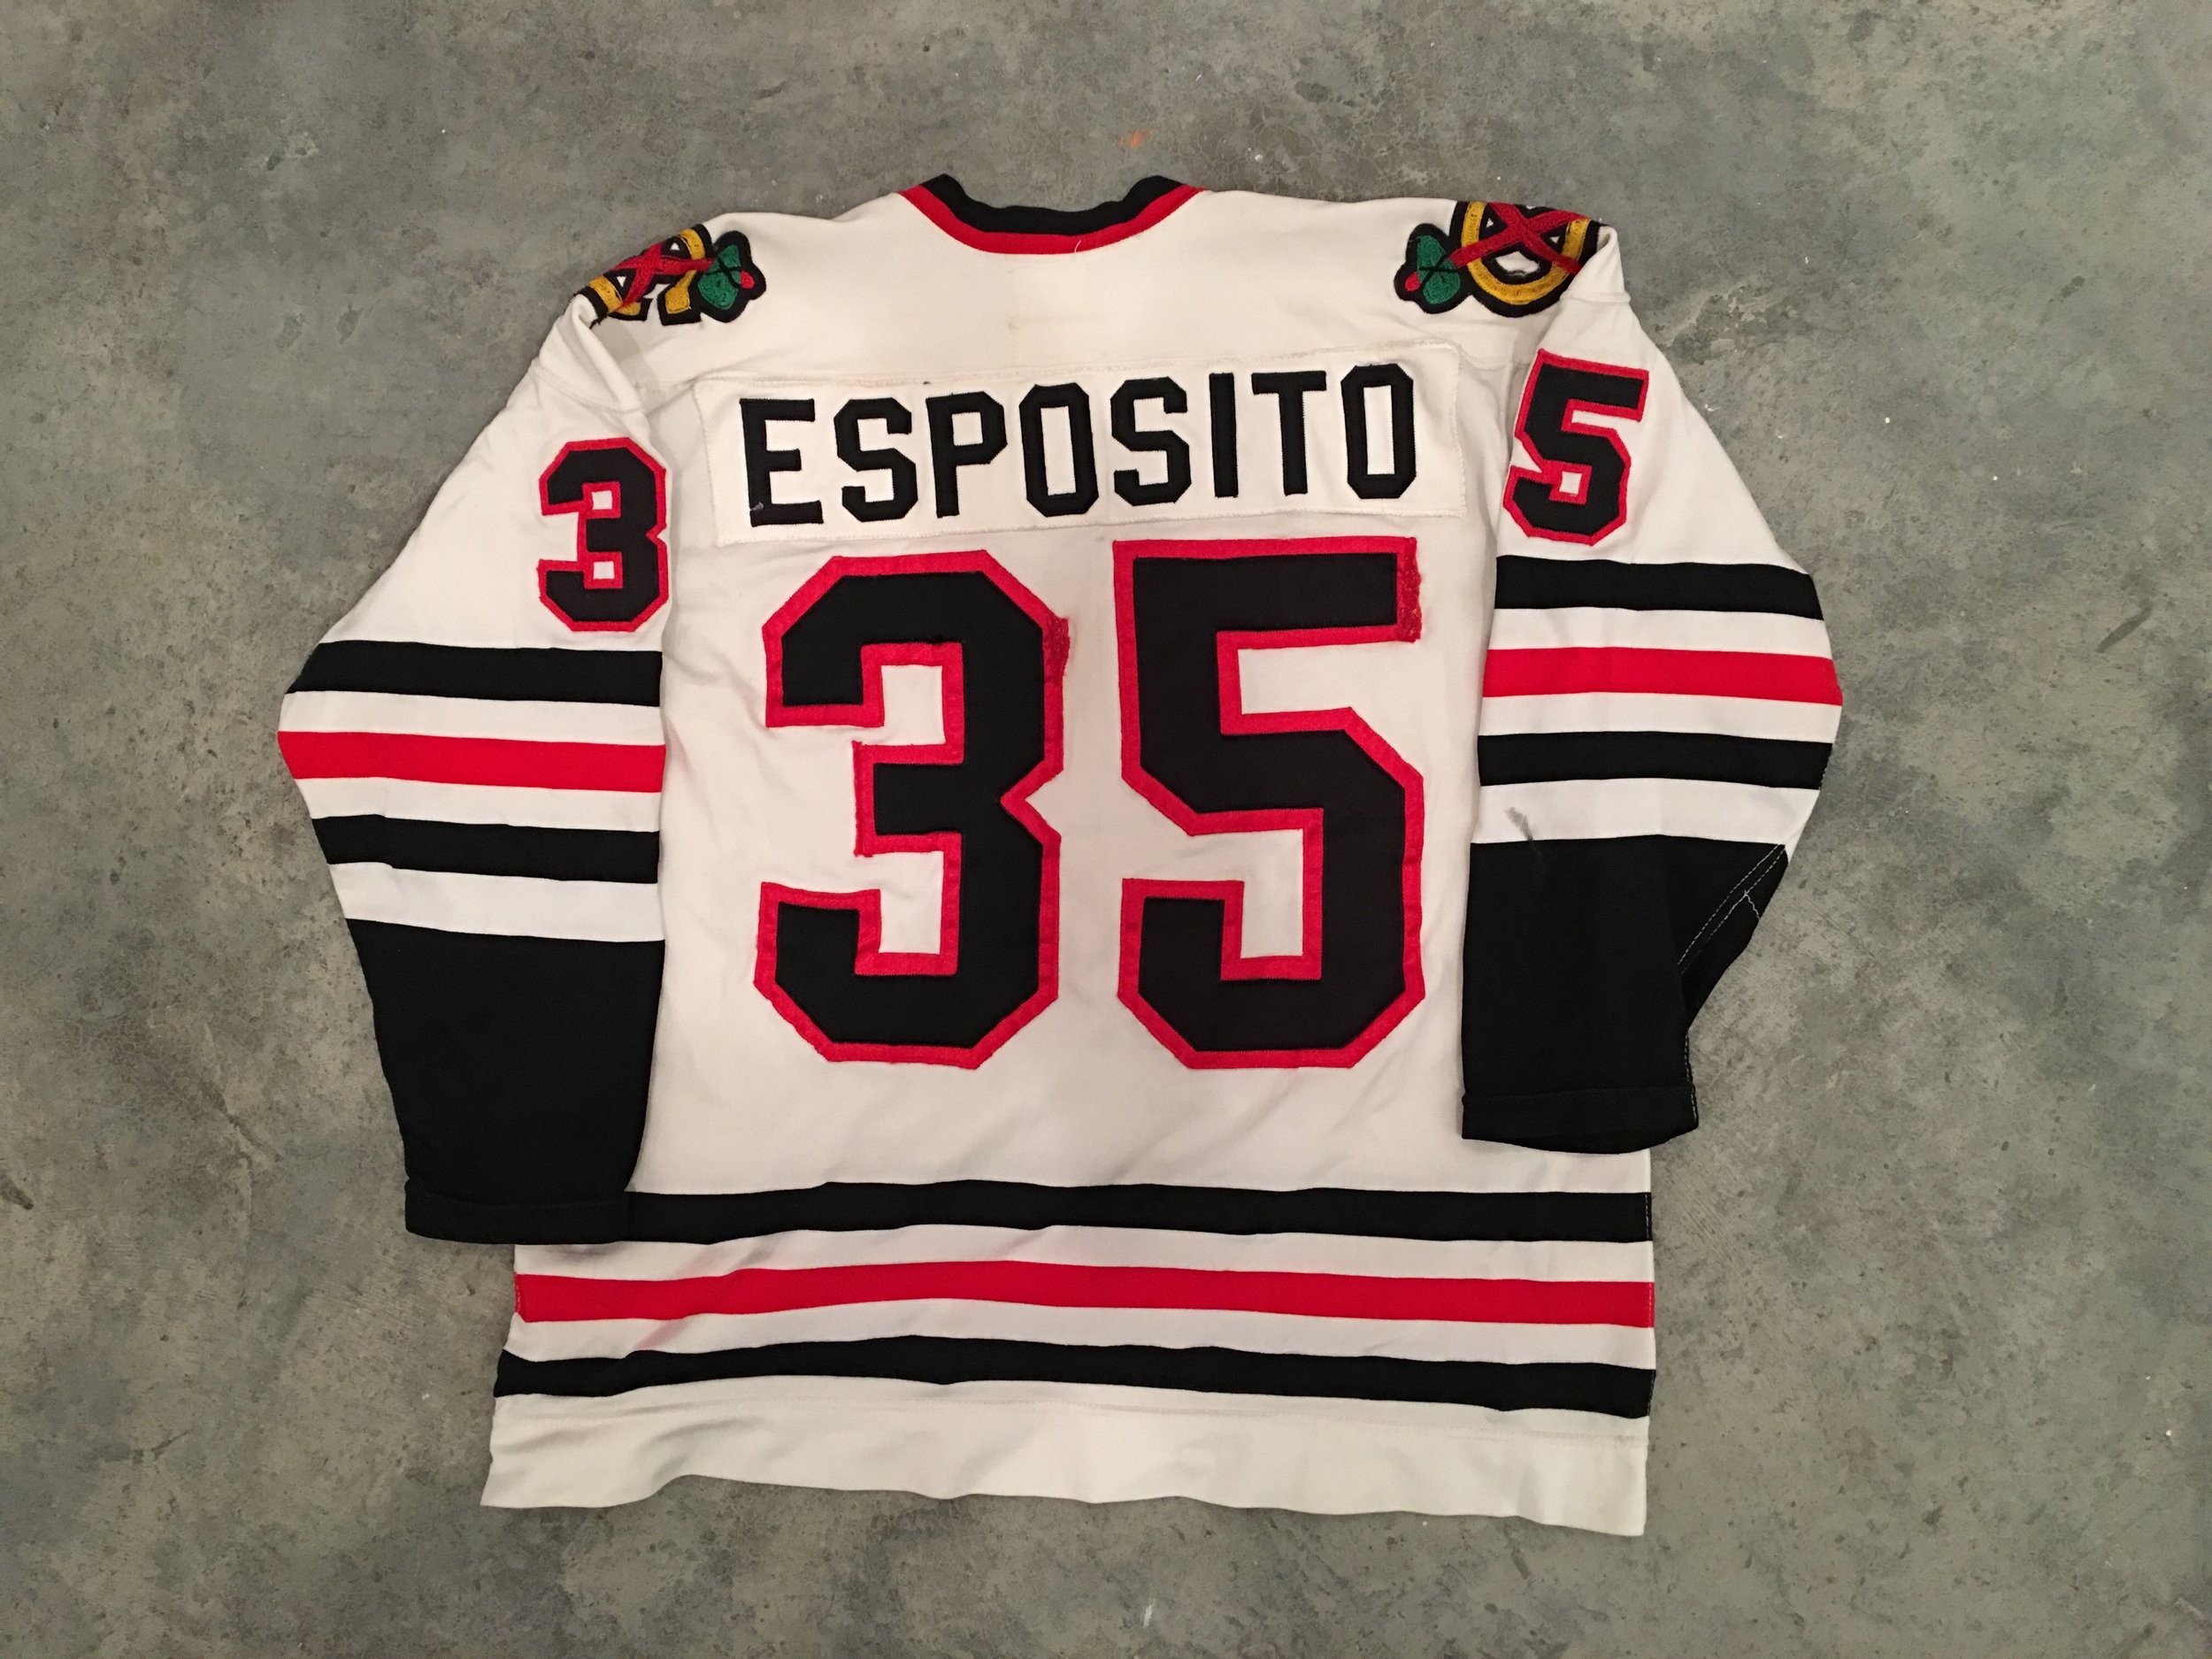 Blackhaws Wear #35 Patch for Tony Esposito – SportsLogos.Net News